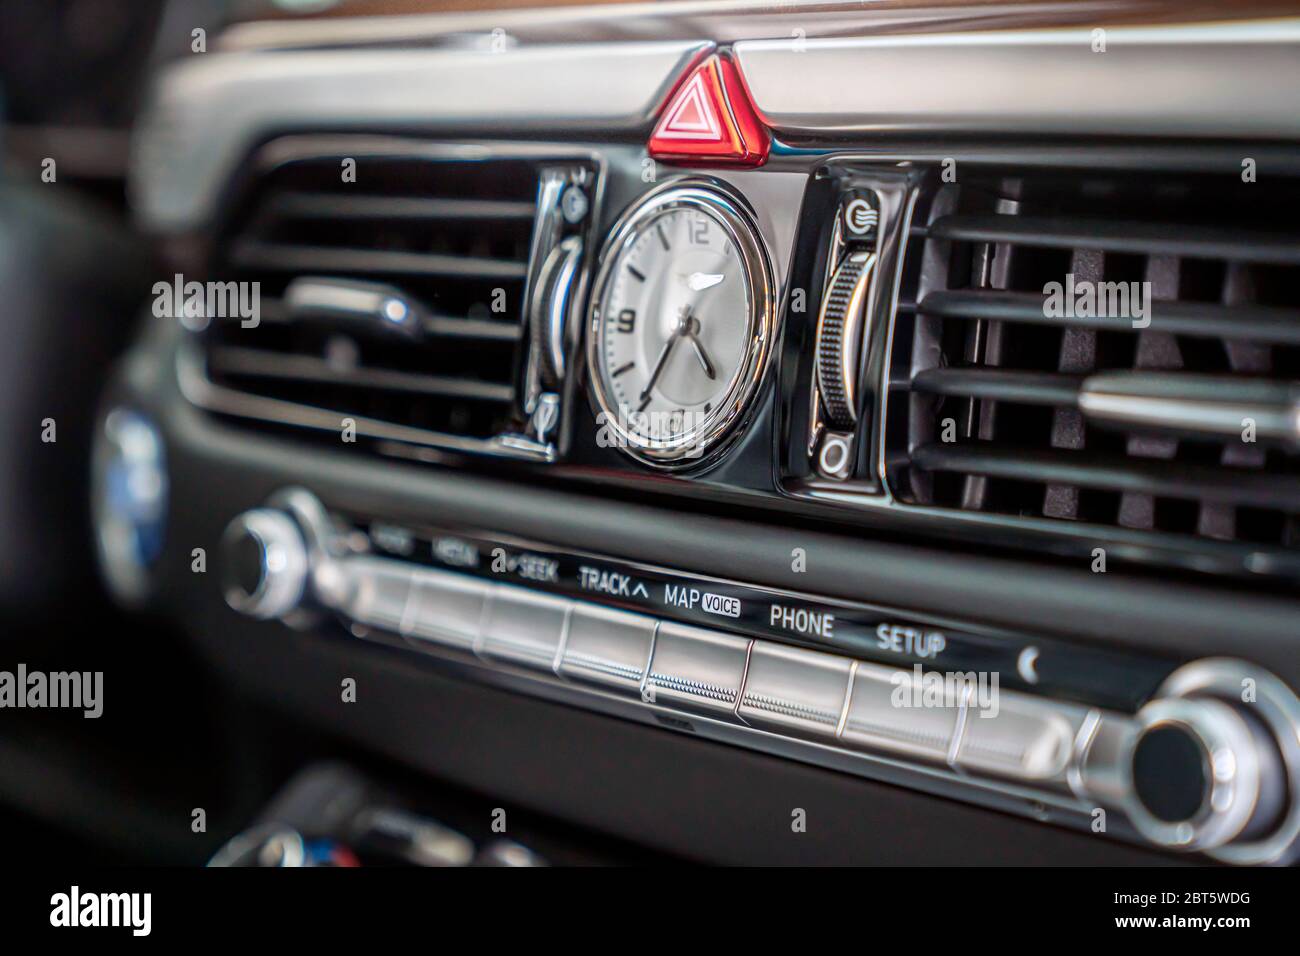 Analoge Uhr im Innenraum des Autos Stockfotografie - Alamy